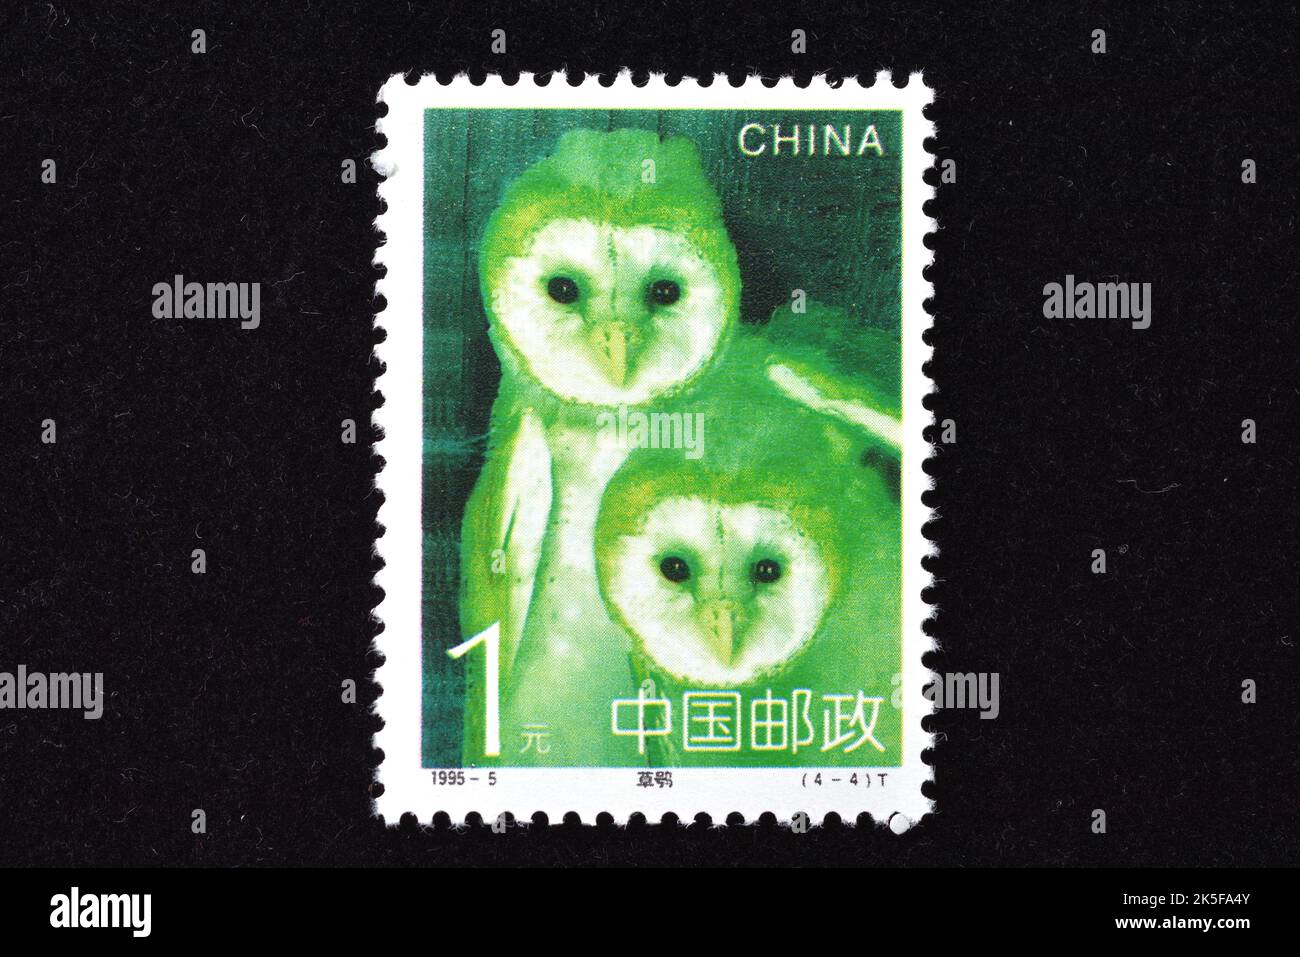 CHINA - CIRCA 1995: A stamp printed in China shows 1995-5, Scott 2559-62 Owls , circa 1995 Stock Photo